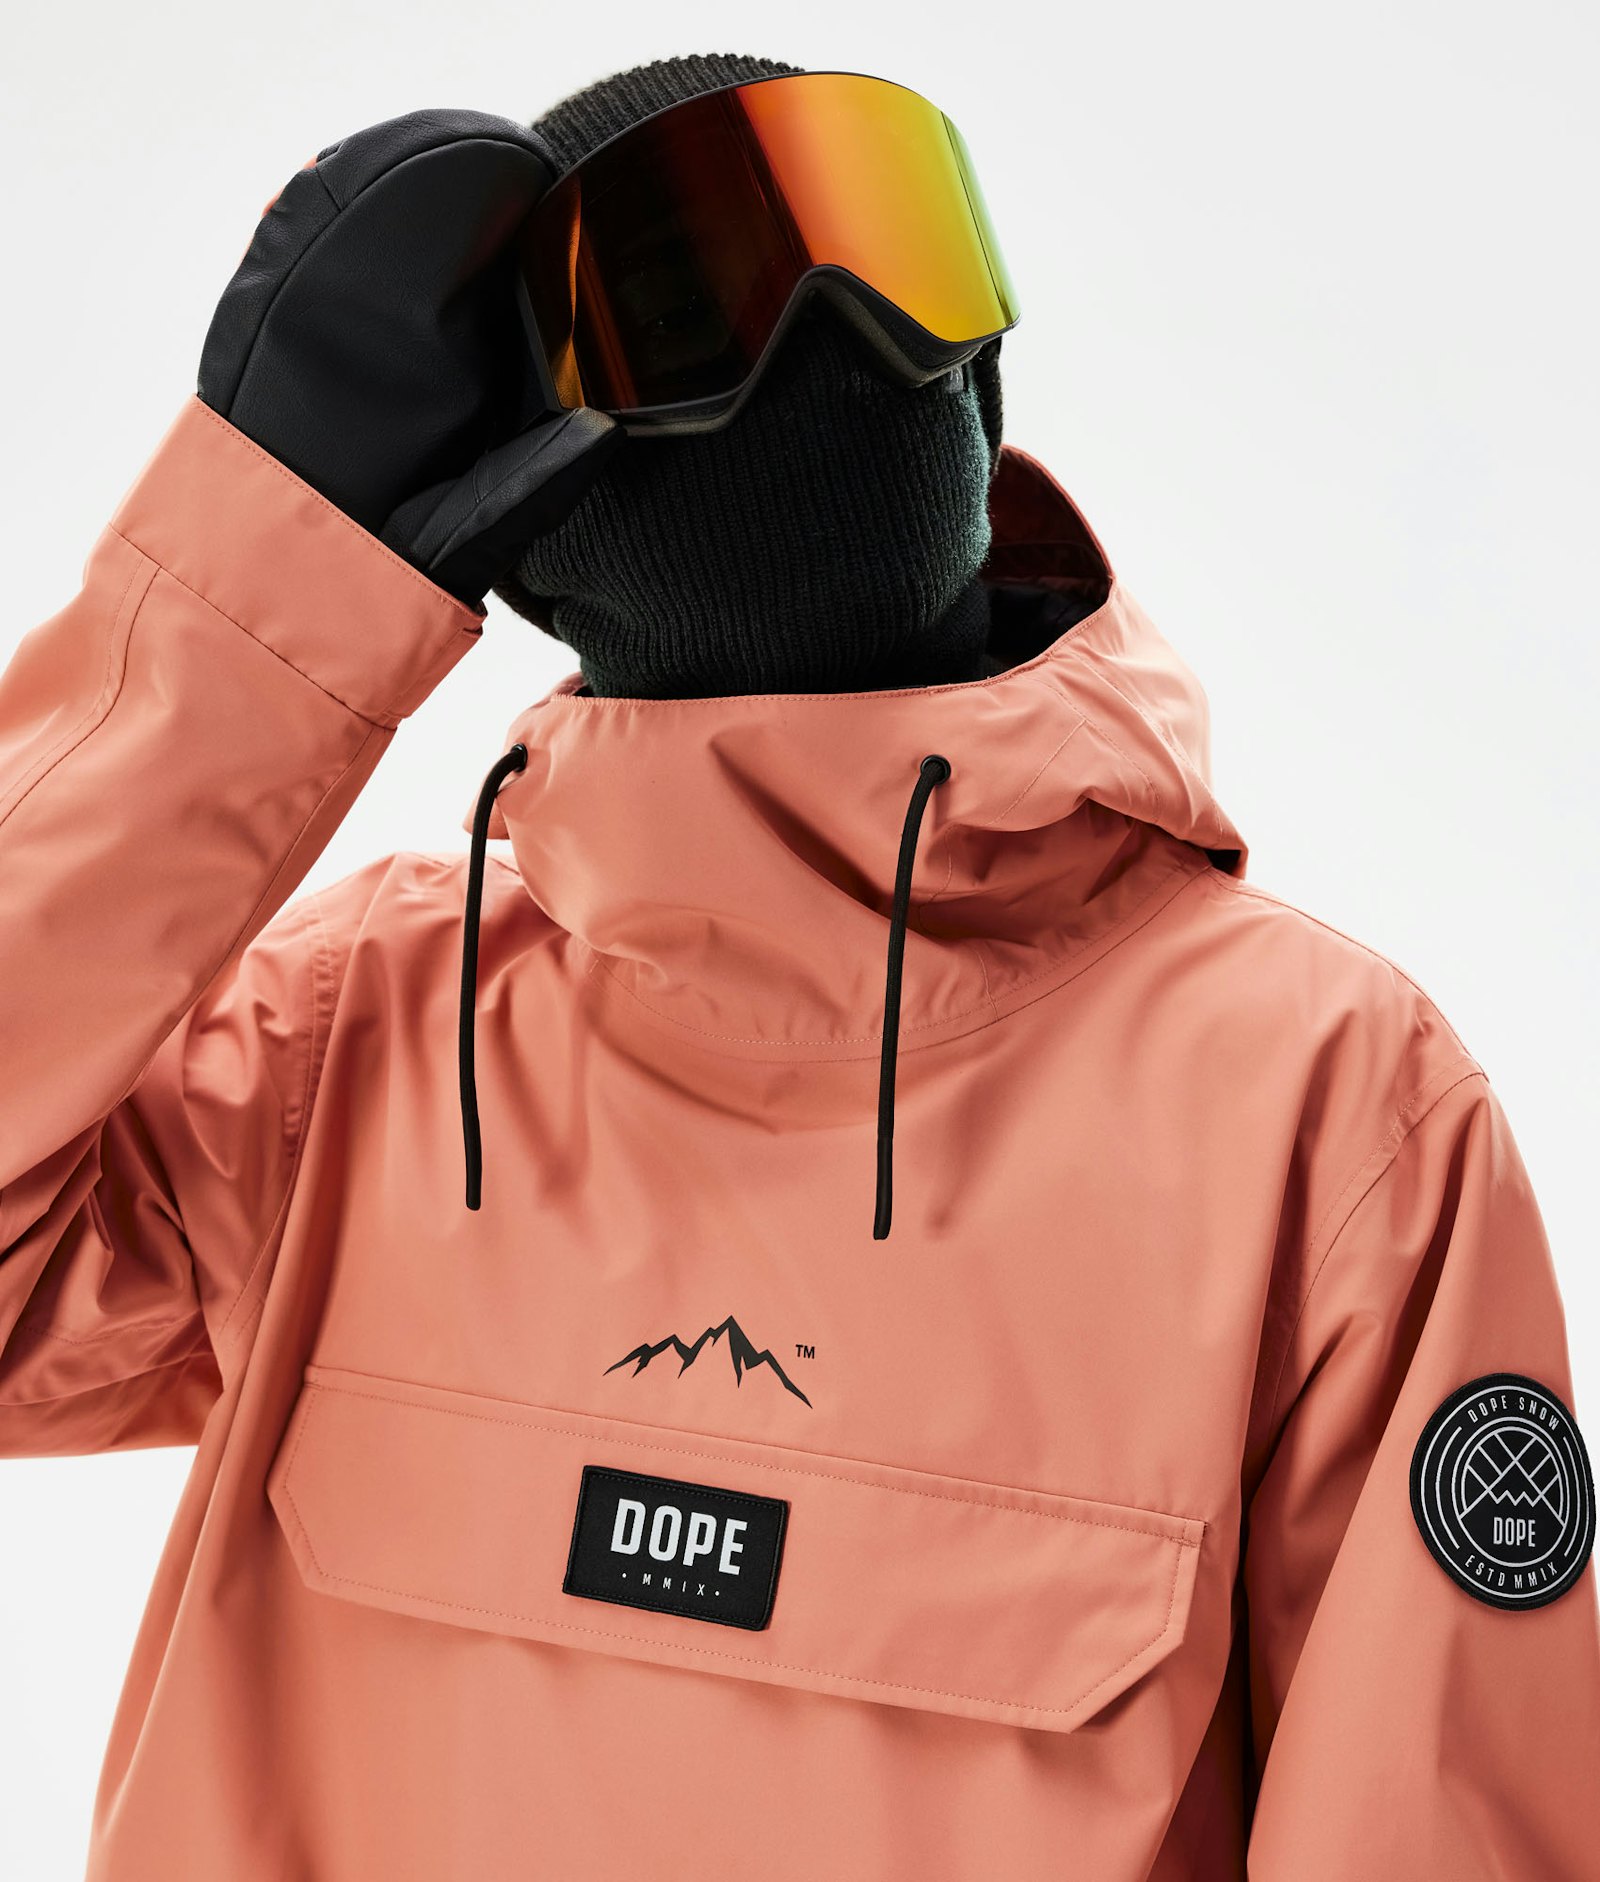 Blizzard 2021 Ski Jacket Men Peach